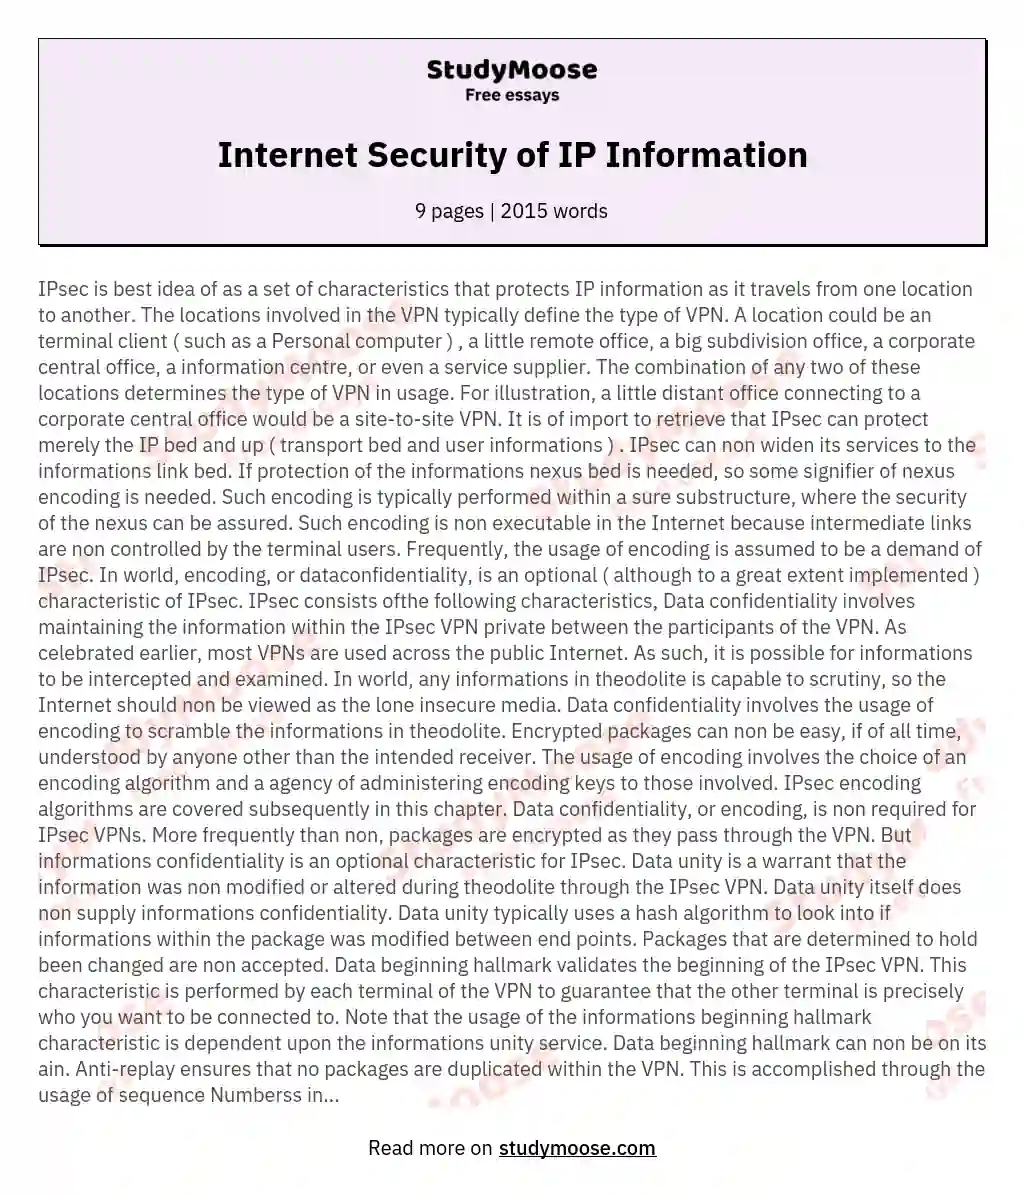 Internet Security of IP Information essay